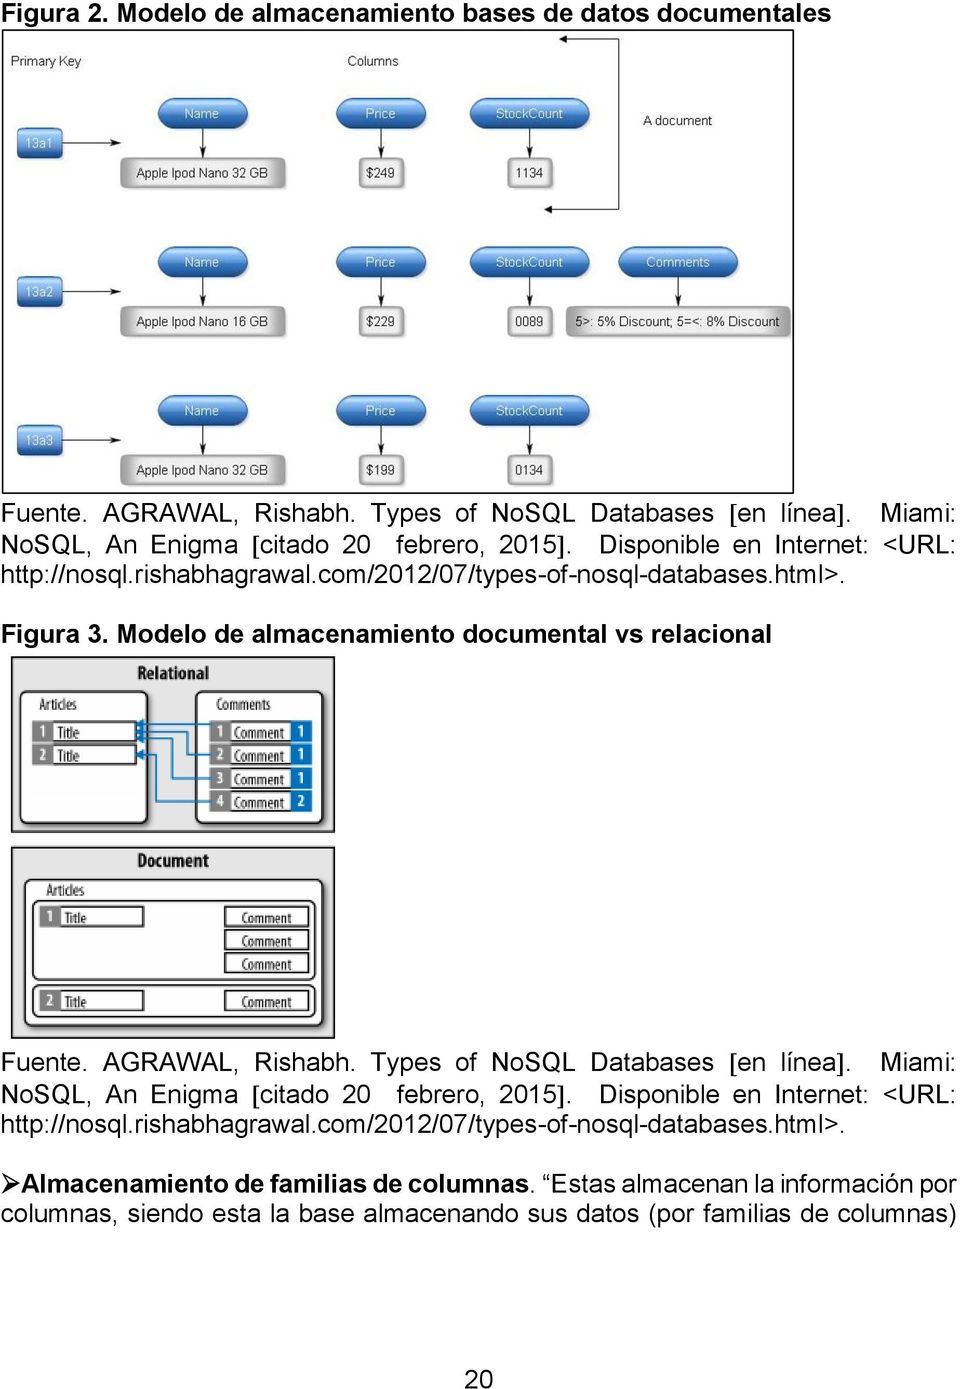 AGRAWAL, Rishabh. Types of NoSQL Databases en línea. Miami: NoSQL, An Enigma citado 20 febrero, 2015. Disponible en Internet: <URL: http://nosql.rishabhagrawal.